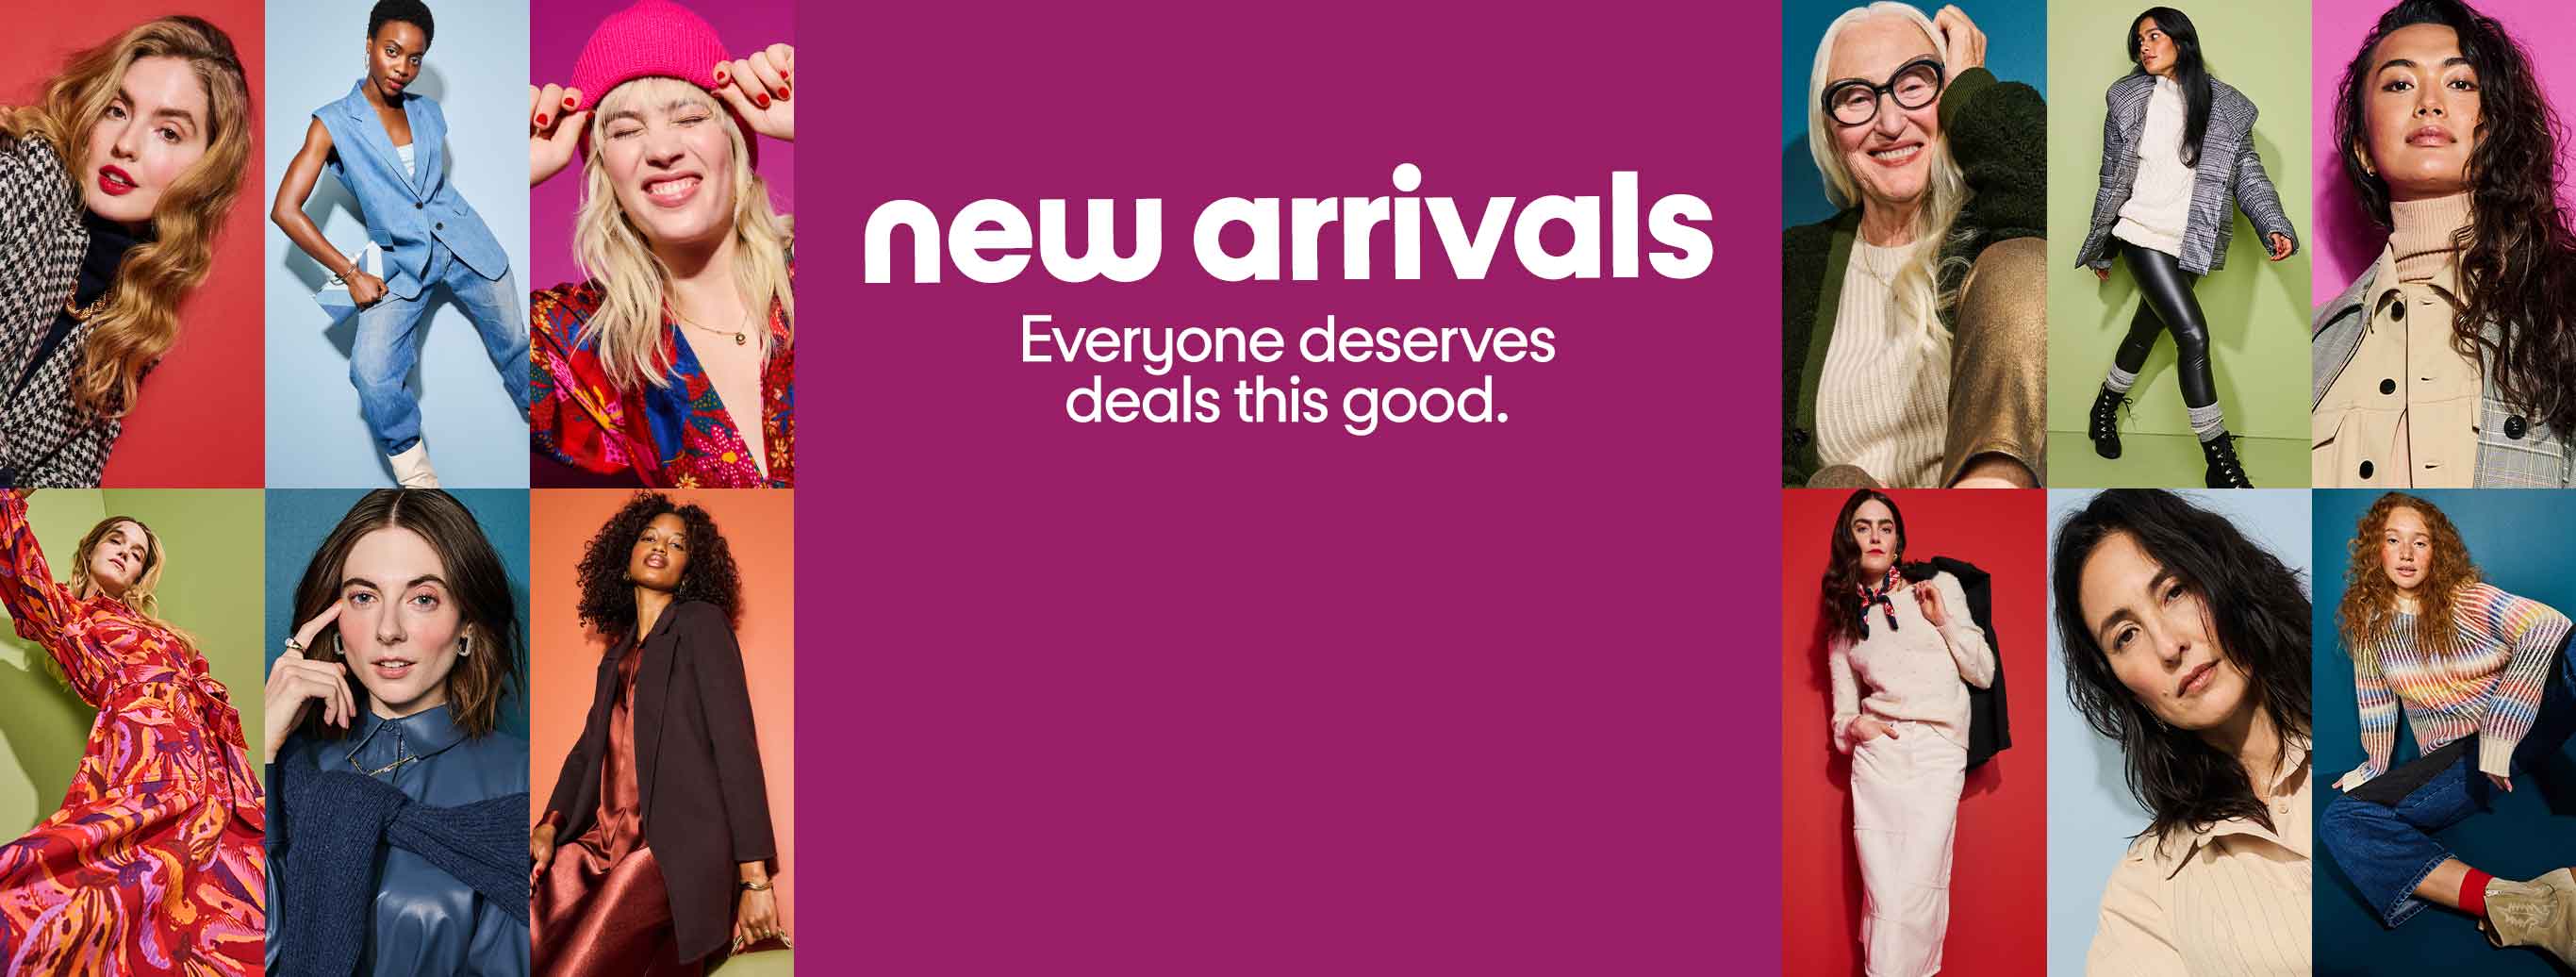 New Arrivals | Everyone deserves deals this good.